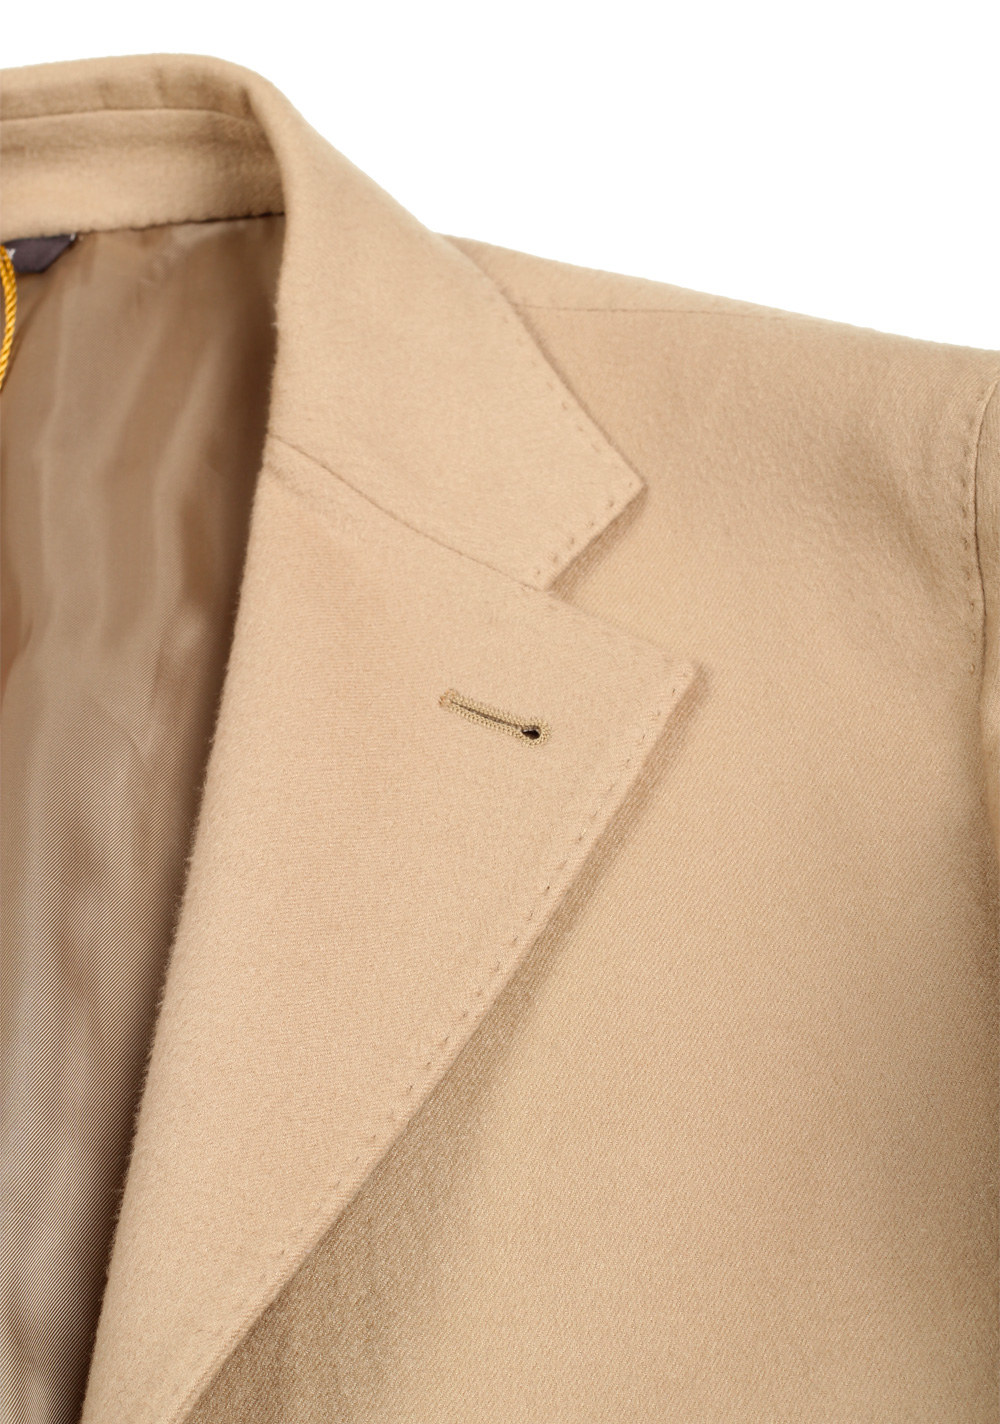 Loro Piana Camel Cashmere Rain System Coat Size 48 / 38R U.S. Outerwear | Costume Limité